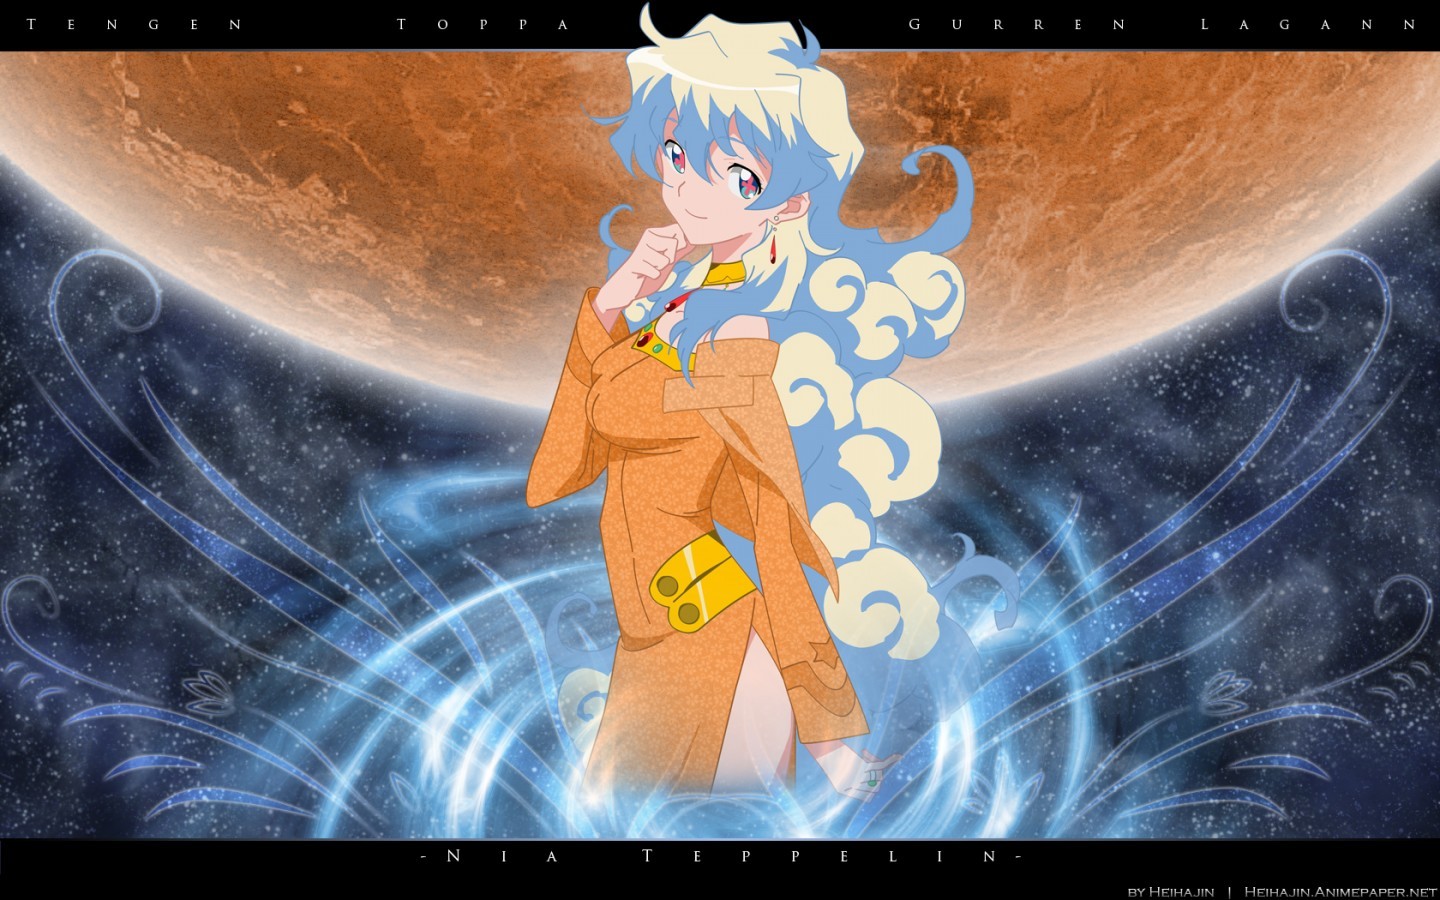 Anime 1440x900 Teppelin Nia anime girls anime Tengen Toppa Gurren Lagann blue hair smiling standing looking at viewer